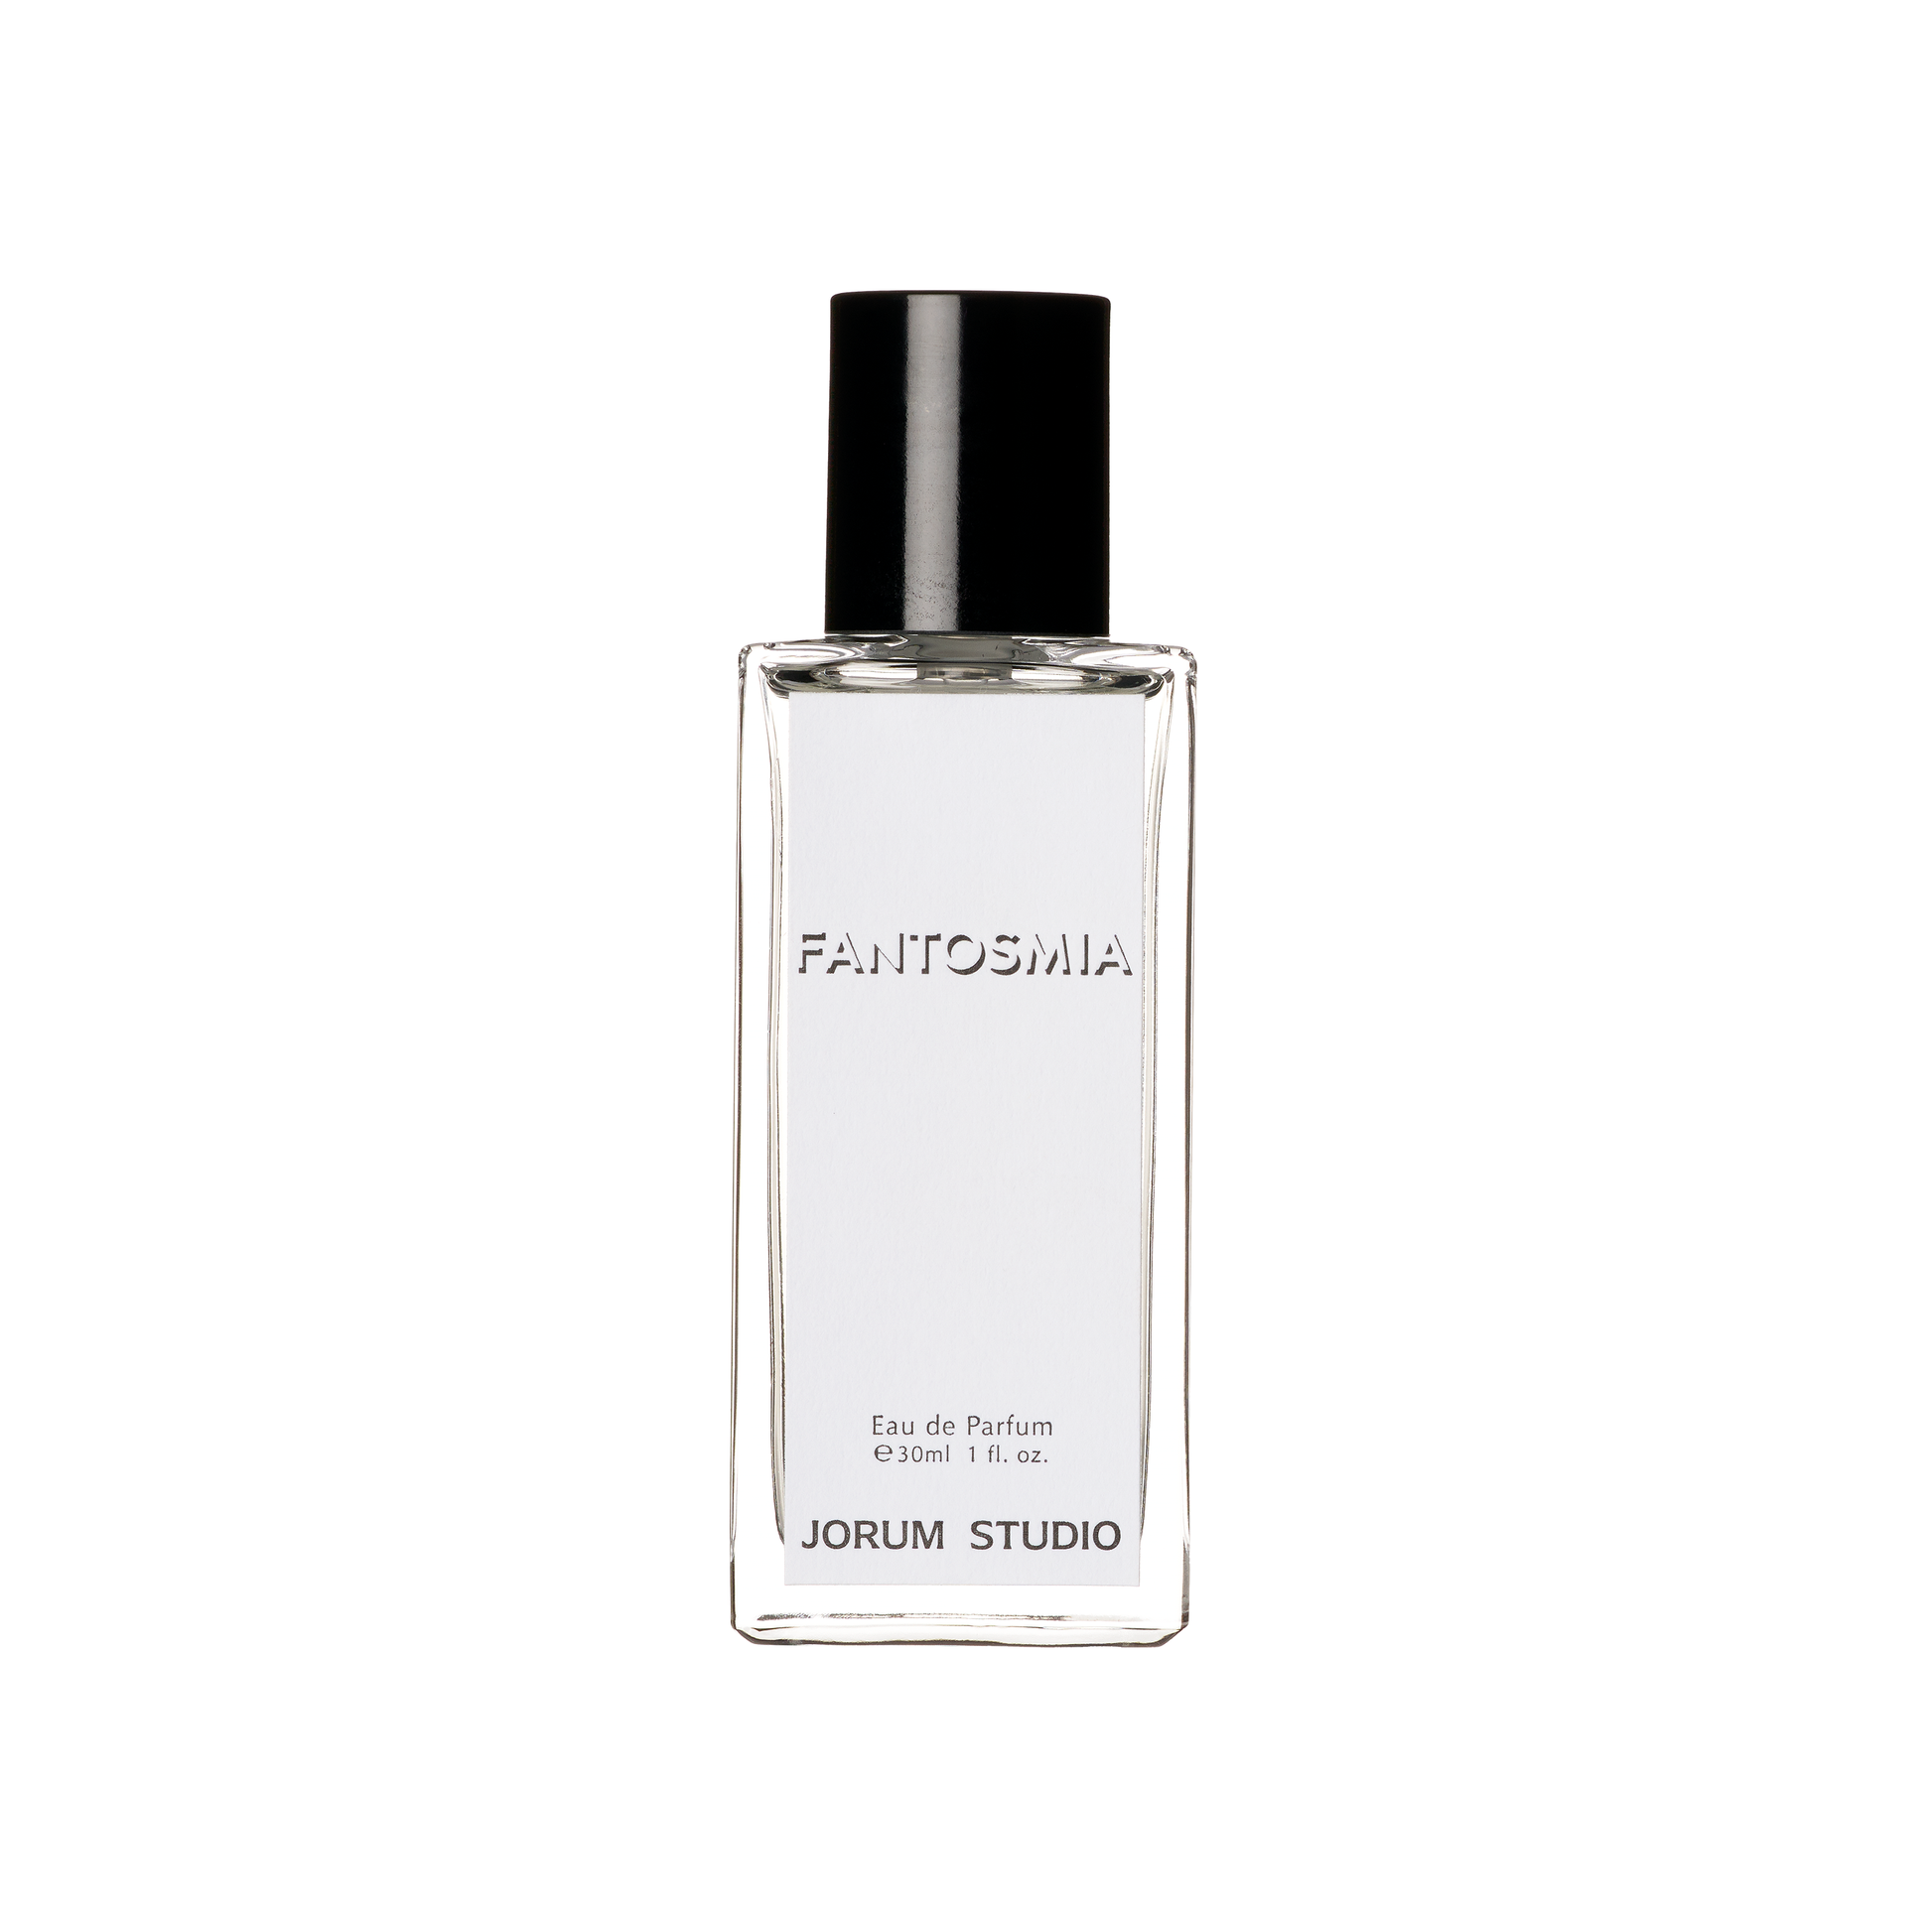 30ml bottle of Fantosmia Eau de Parfum by independent Scottish perfumers Jorum Studio